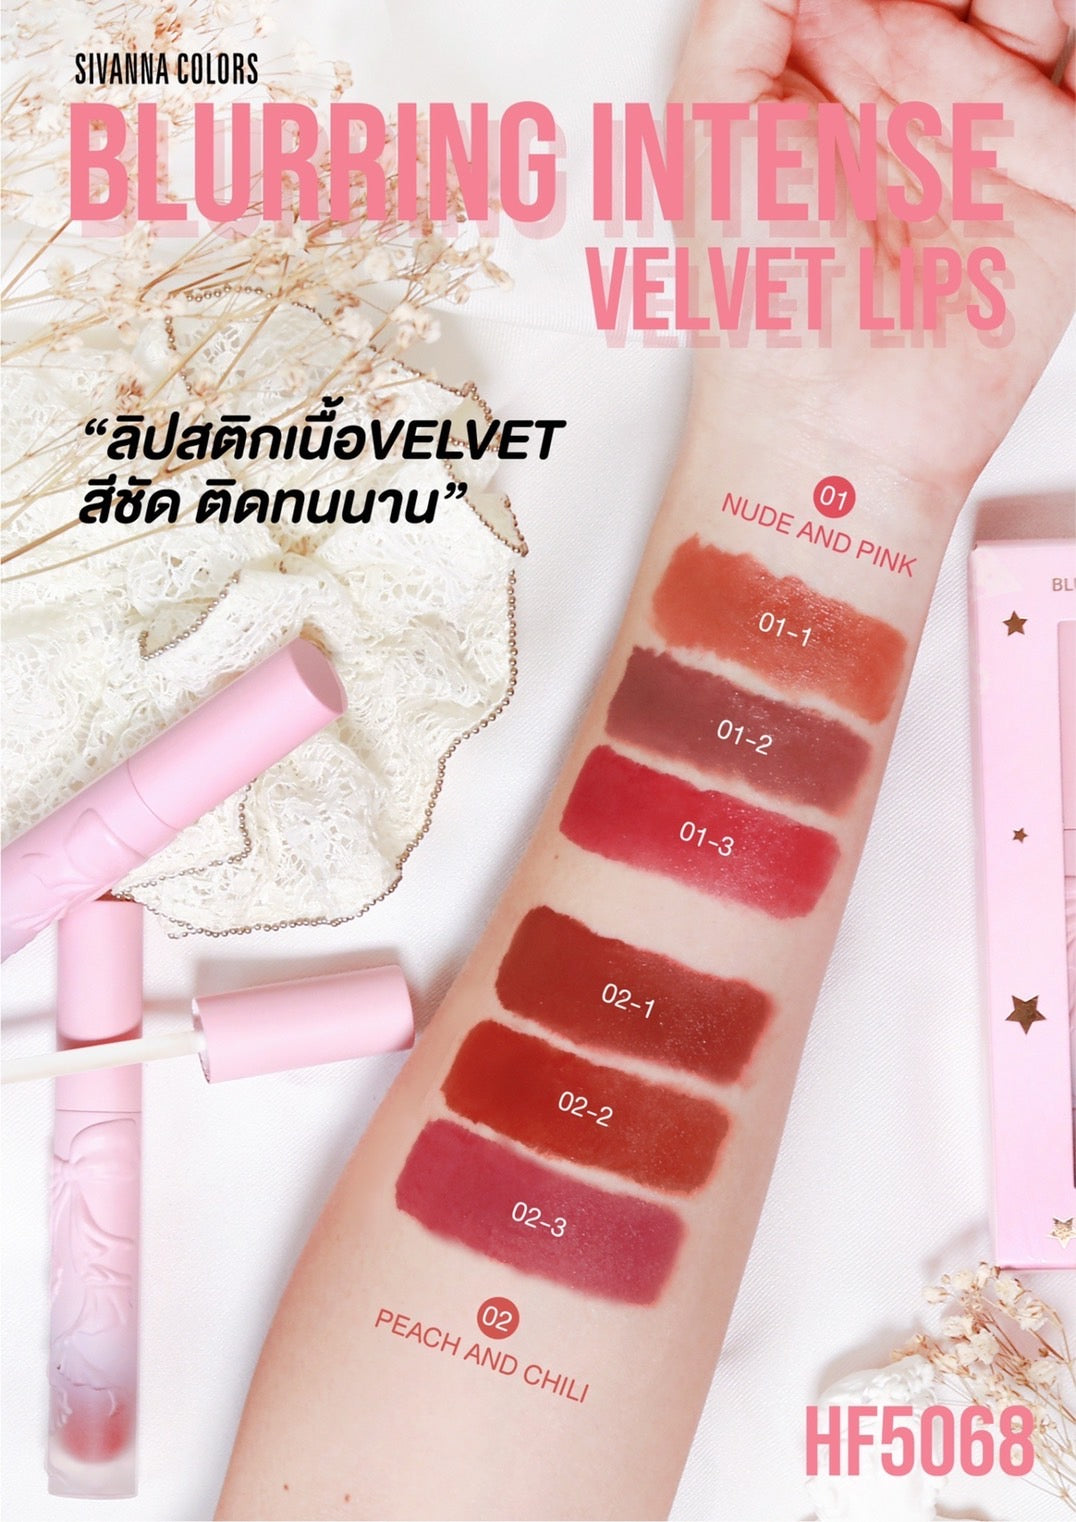 Sivanna Blurring Intense Velvet Lips #HF5068 : ซิวานน่า เบลอริ่ง เวลเวท ลิป ลิปสติก